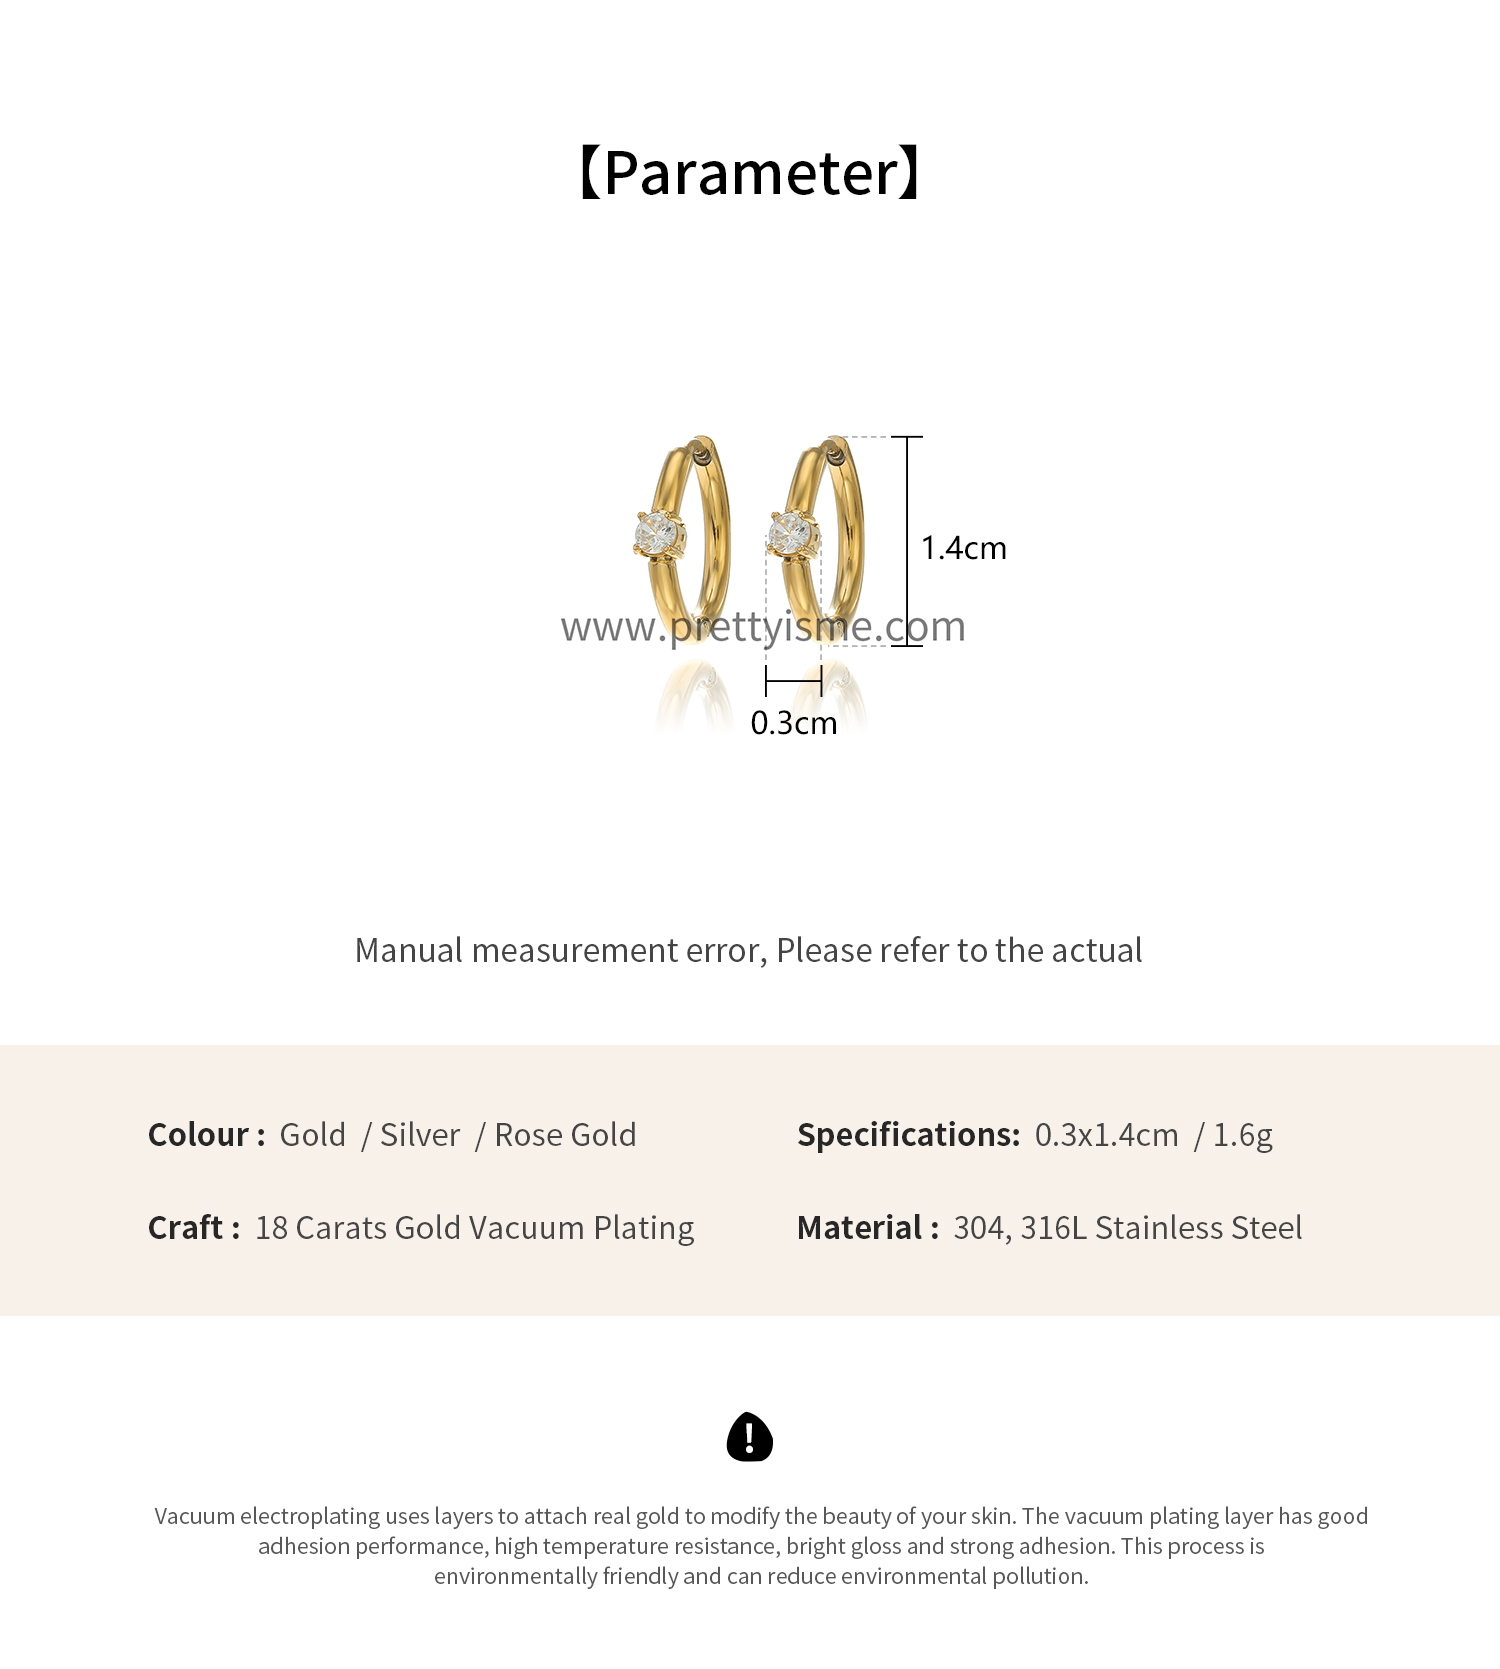 Small Hoop Stainless Steel Earrings Gold Plated 18K Earrings with White Zircons (6).webp